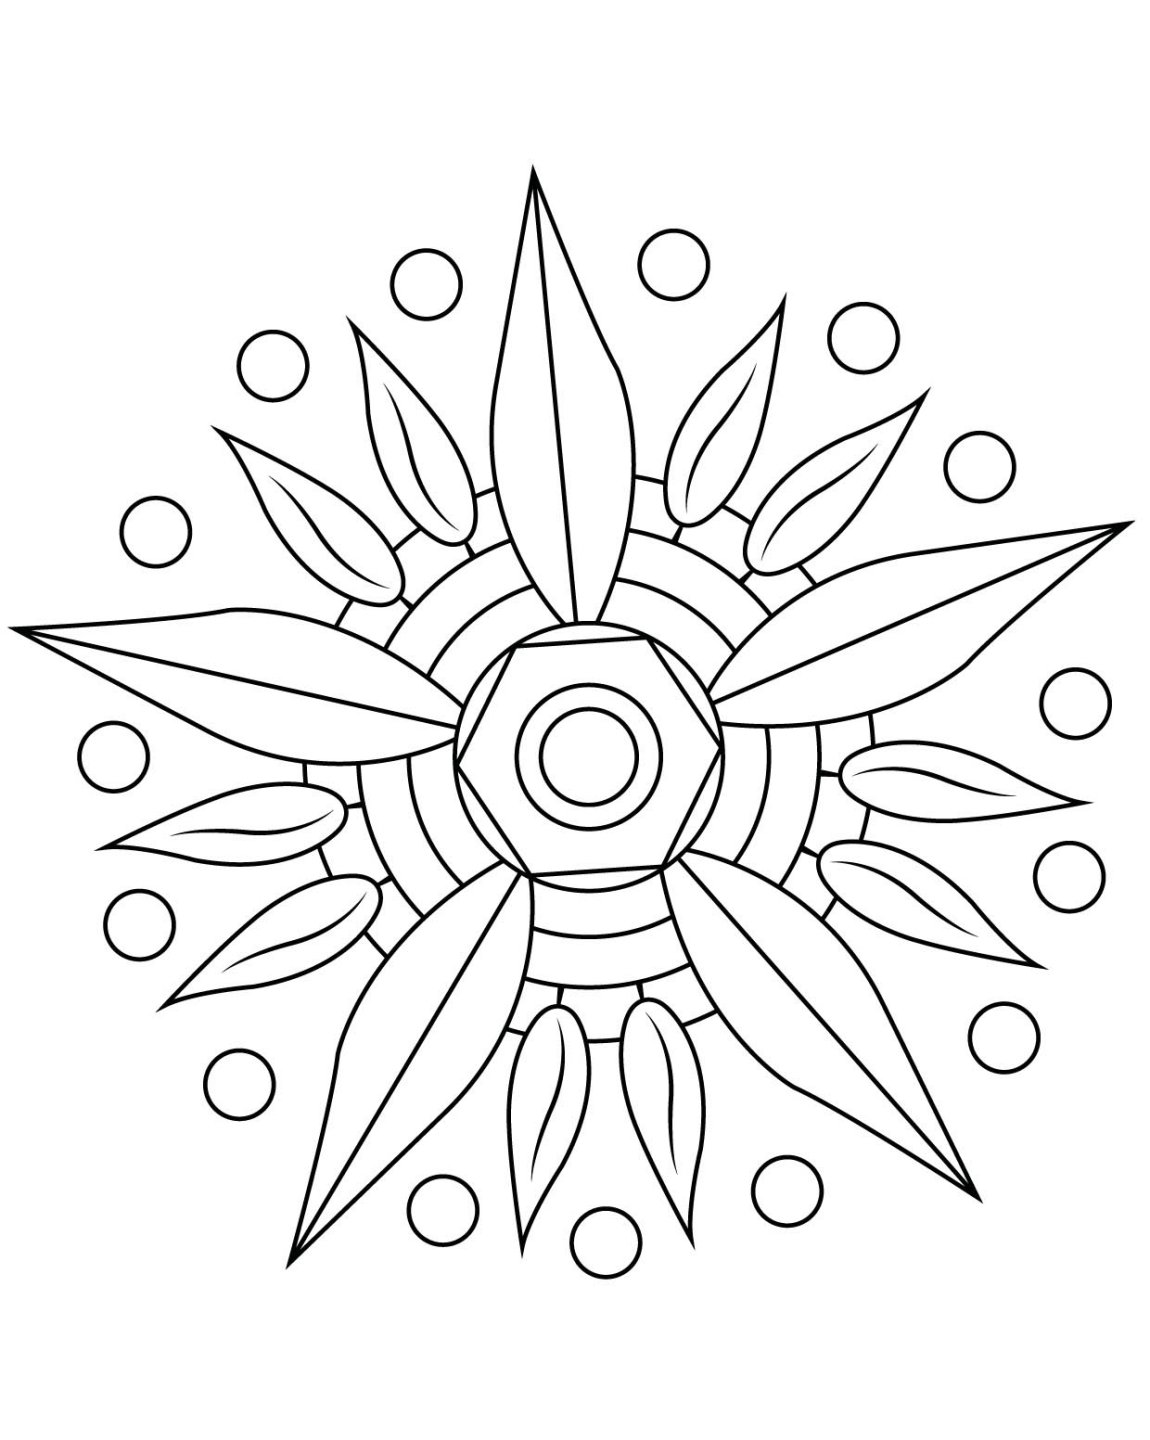 Drawing Mandalas for Kids #124155 (Mandalas) – Printable coloring pages